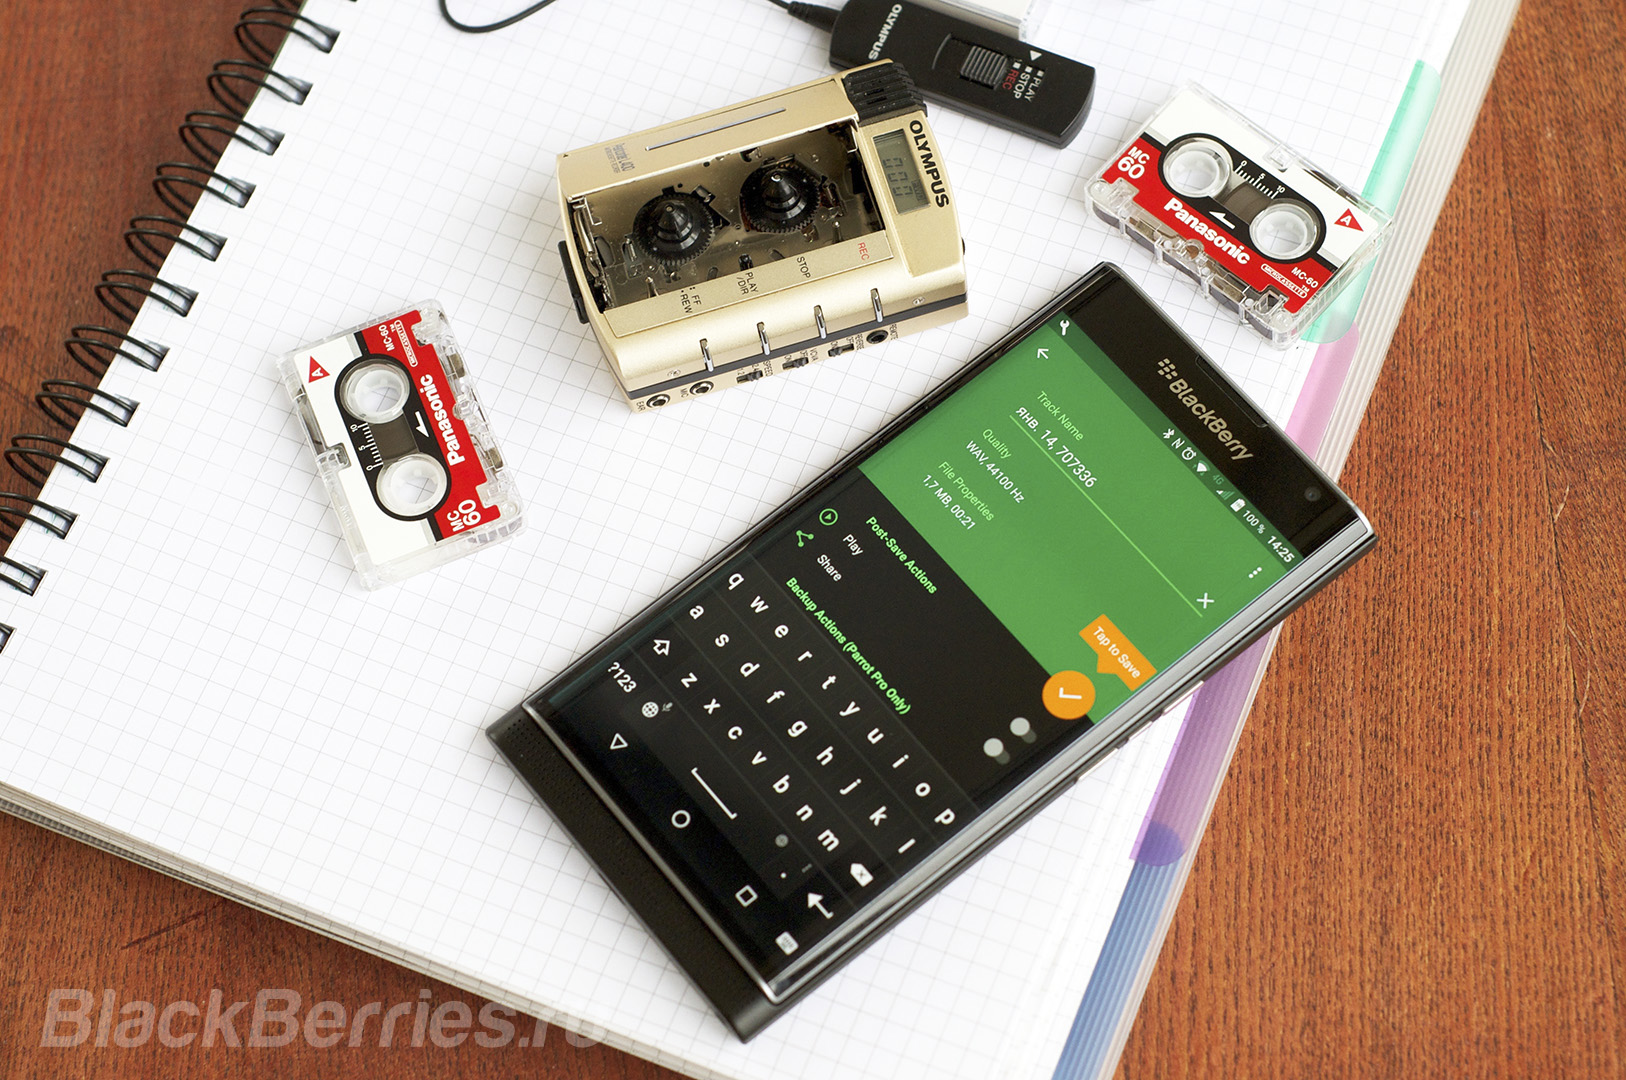 BlackBerry-Android-Recorder-07.jpg